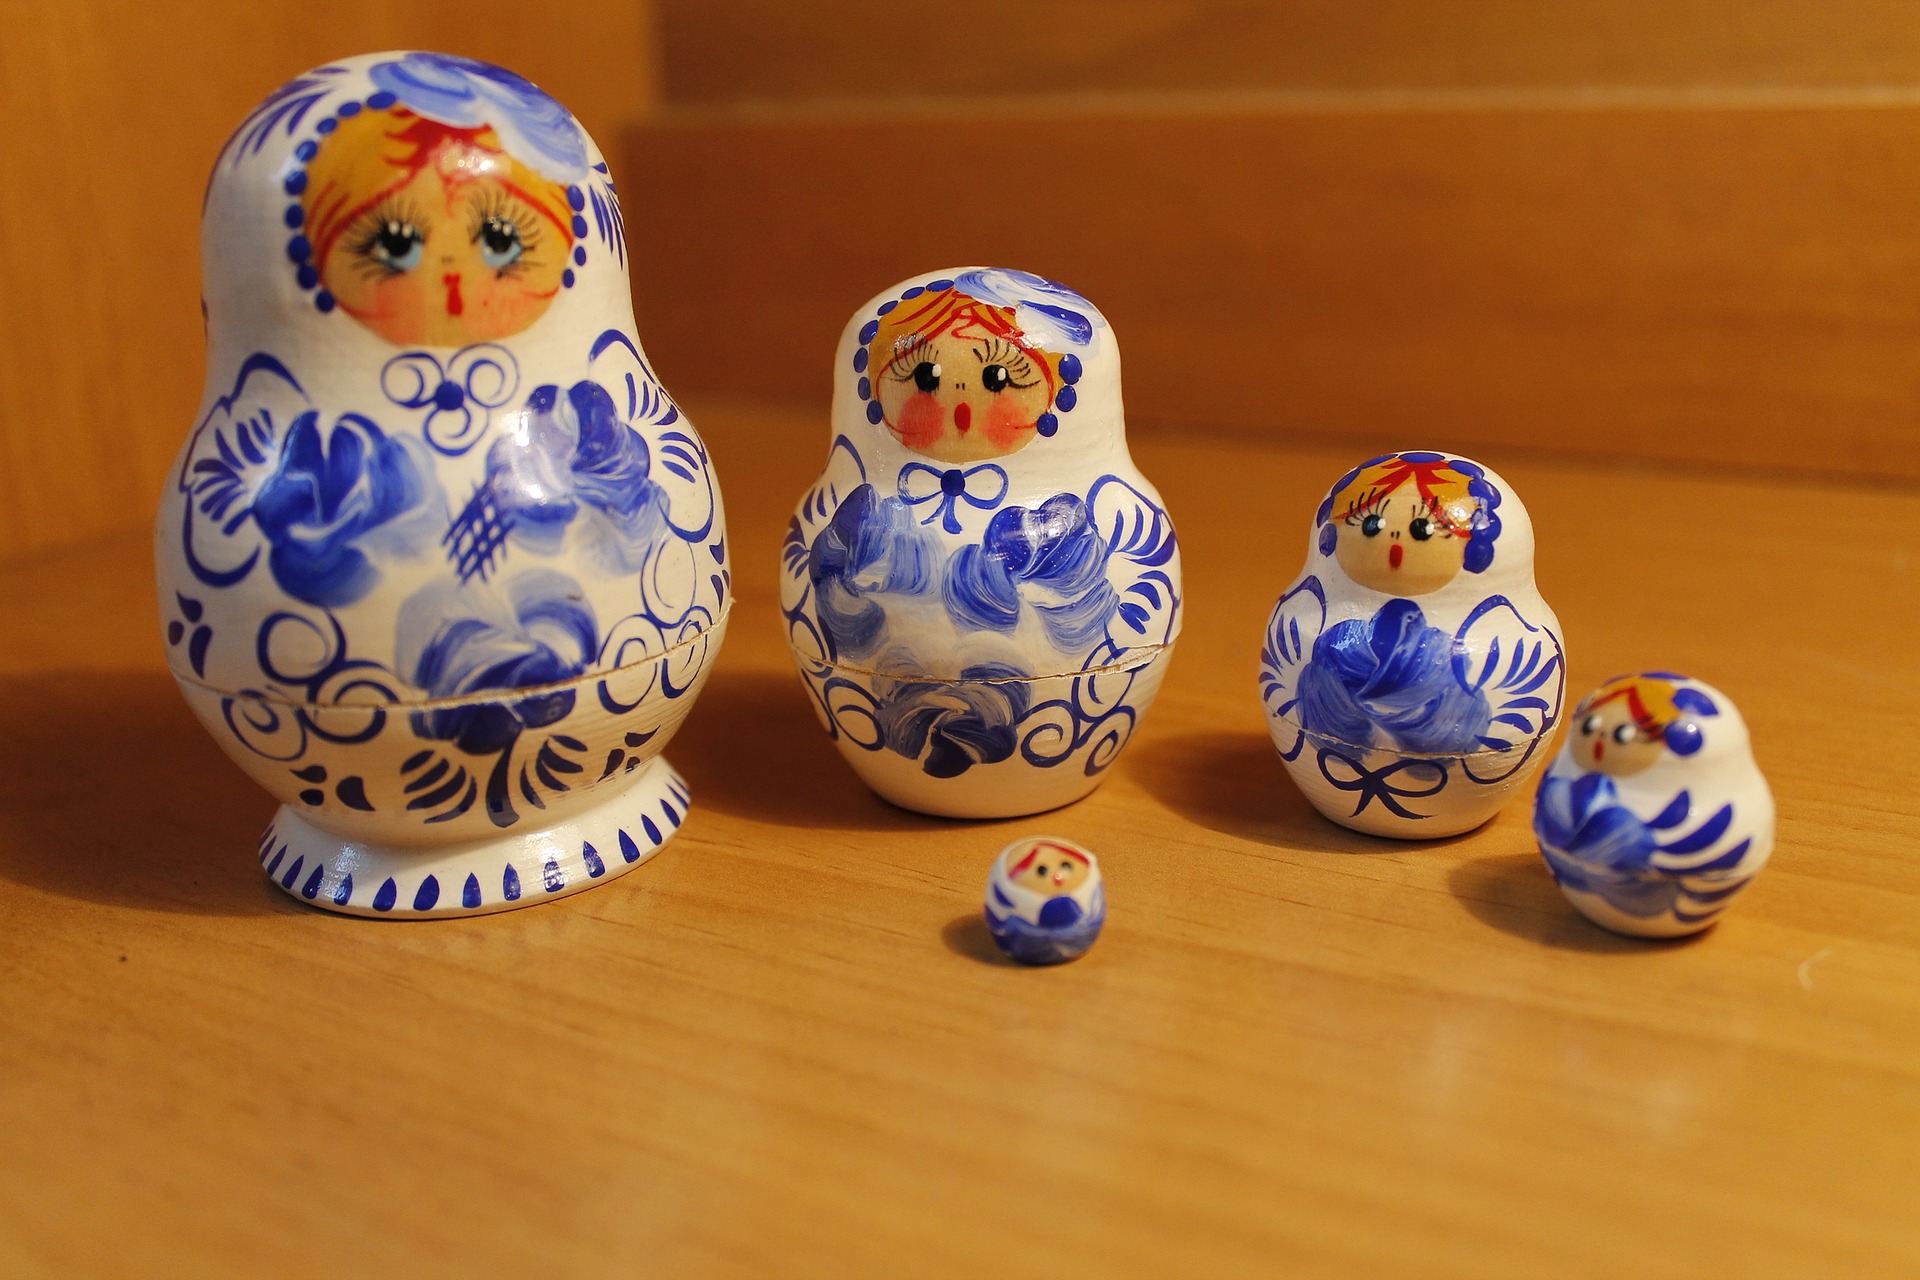 russian-doll-1090713_1920.jpg